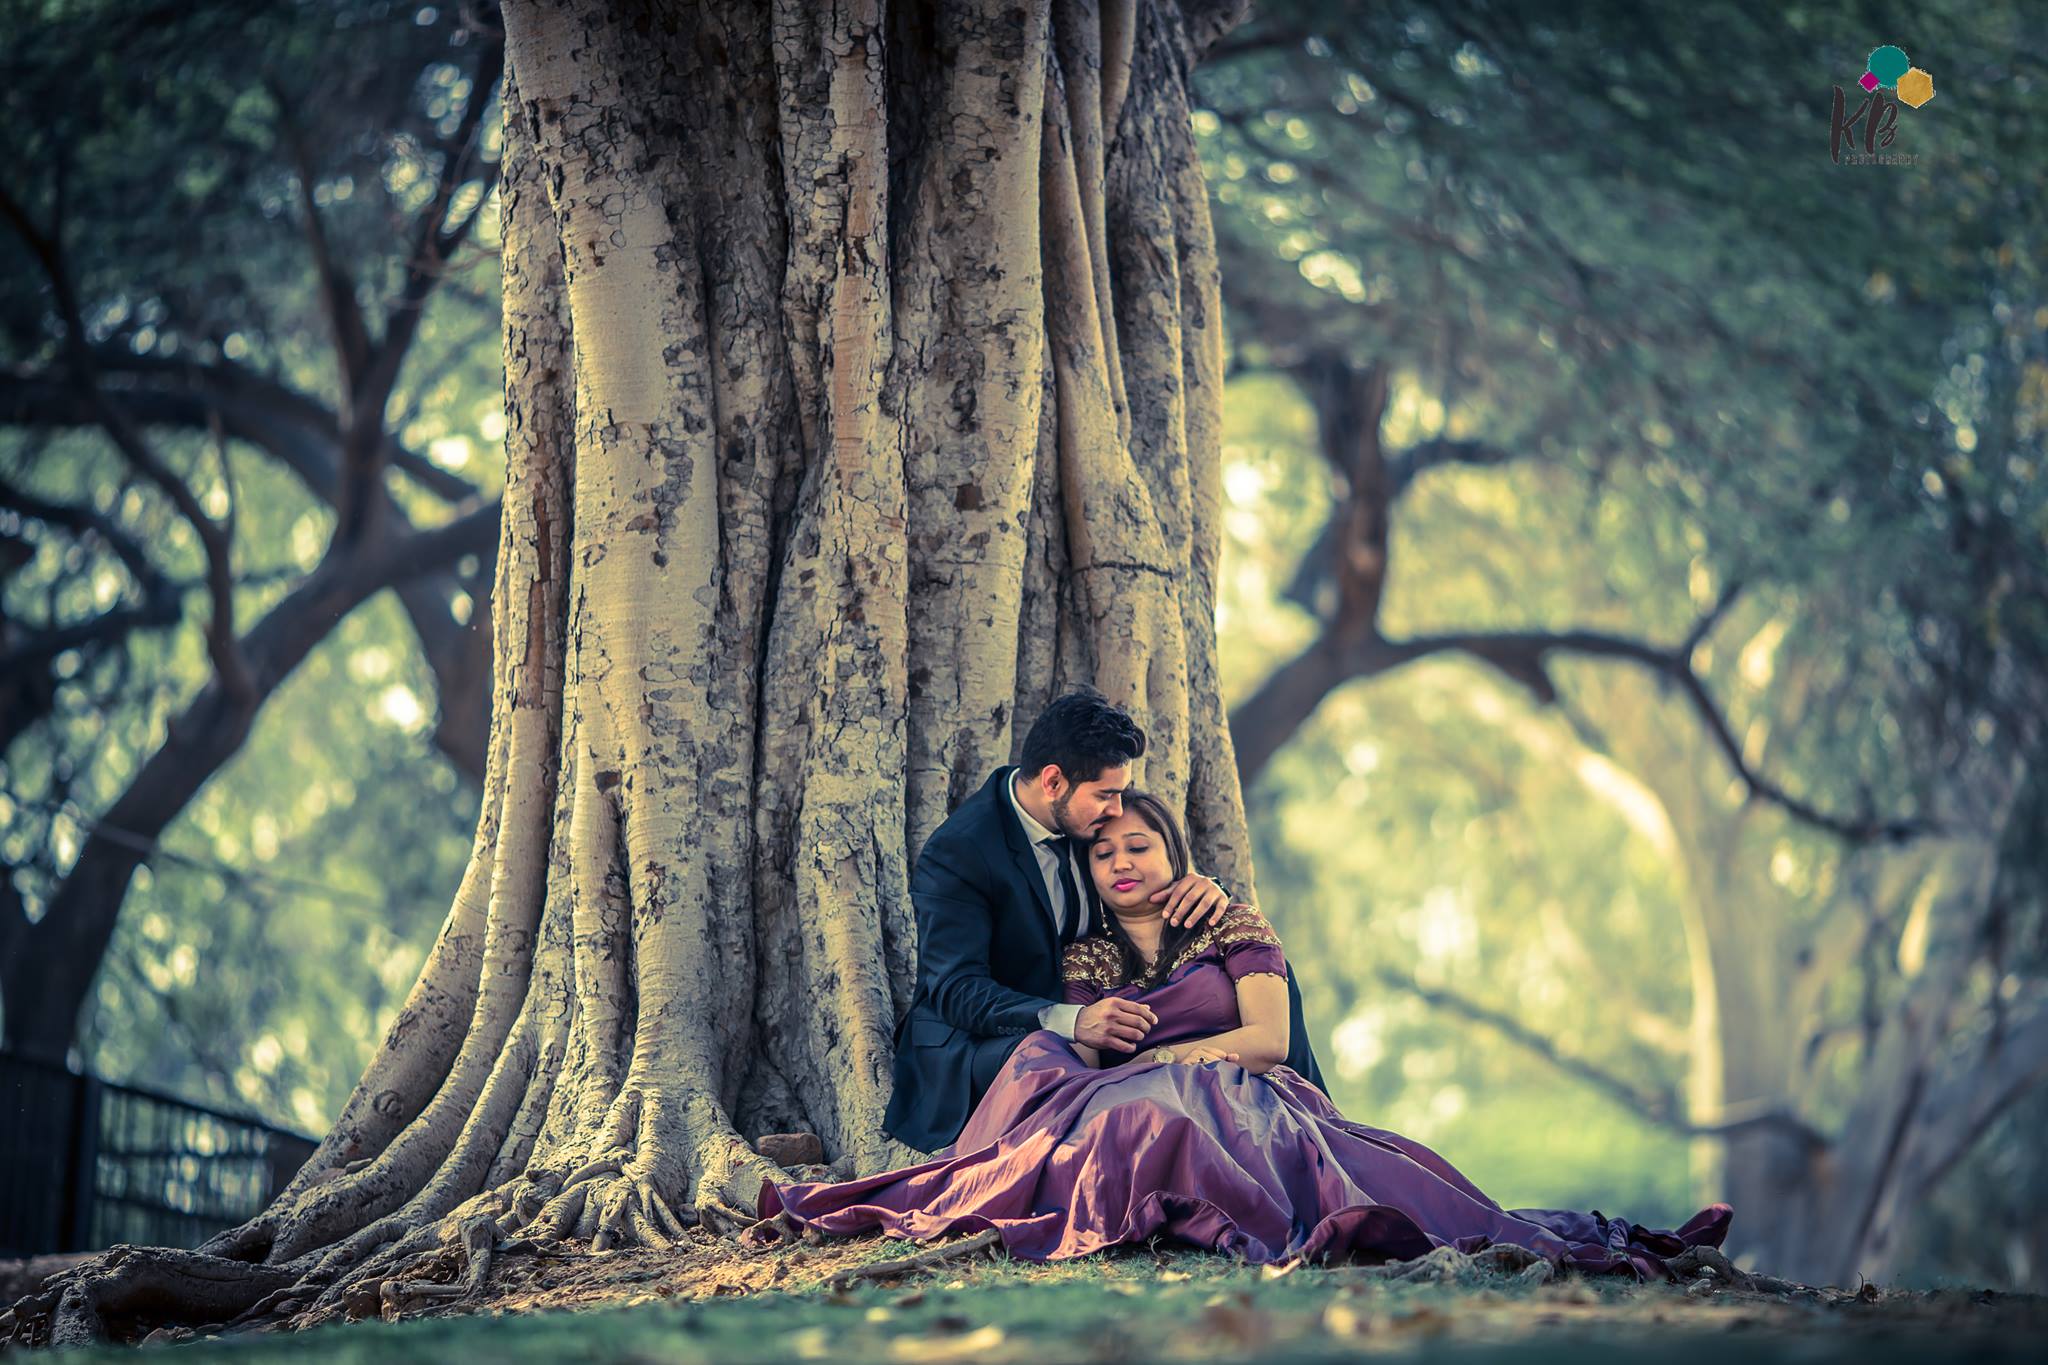 KB Studio Productions Wedding Photographer, Delhi NCR